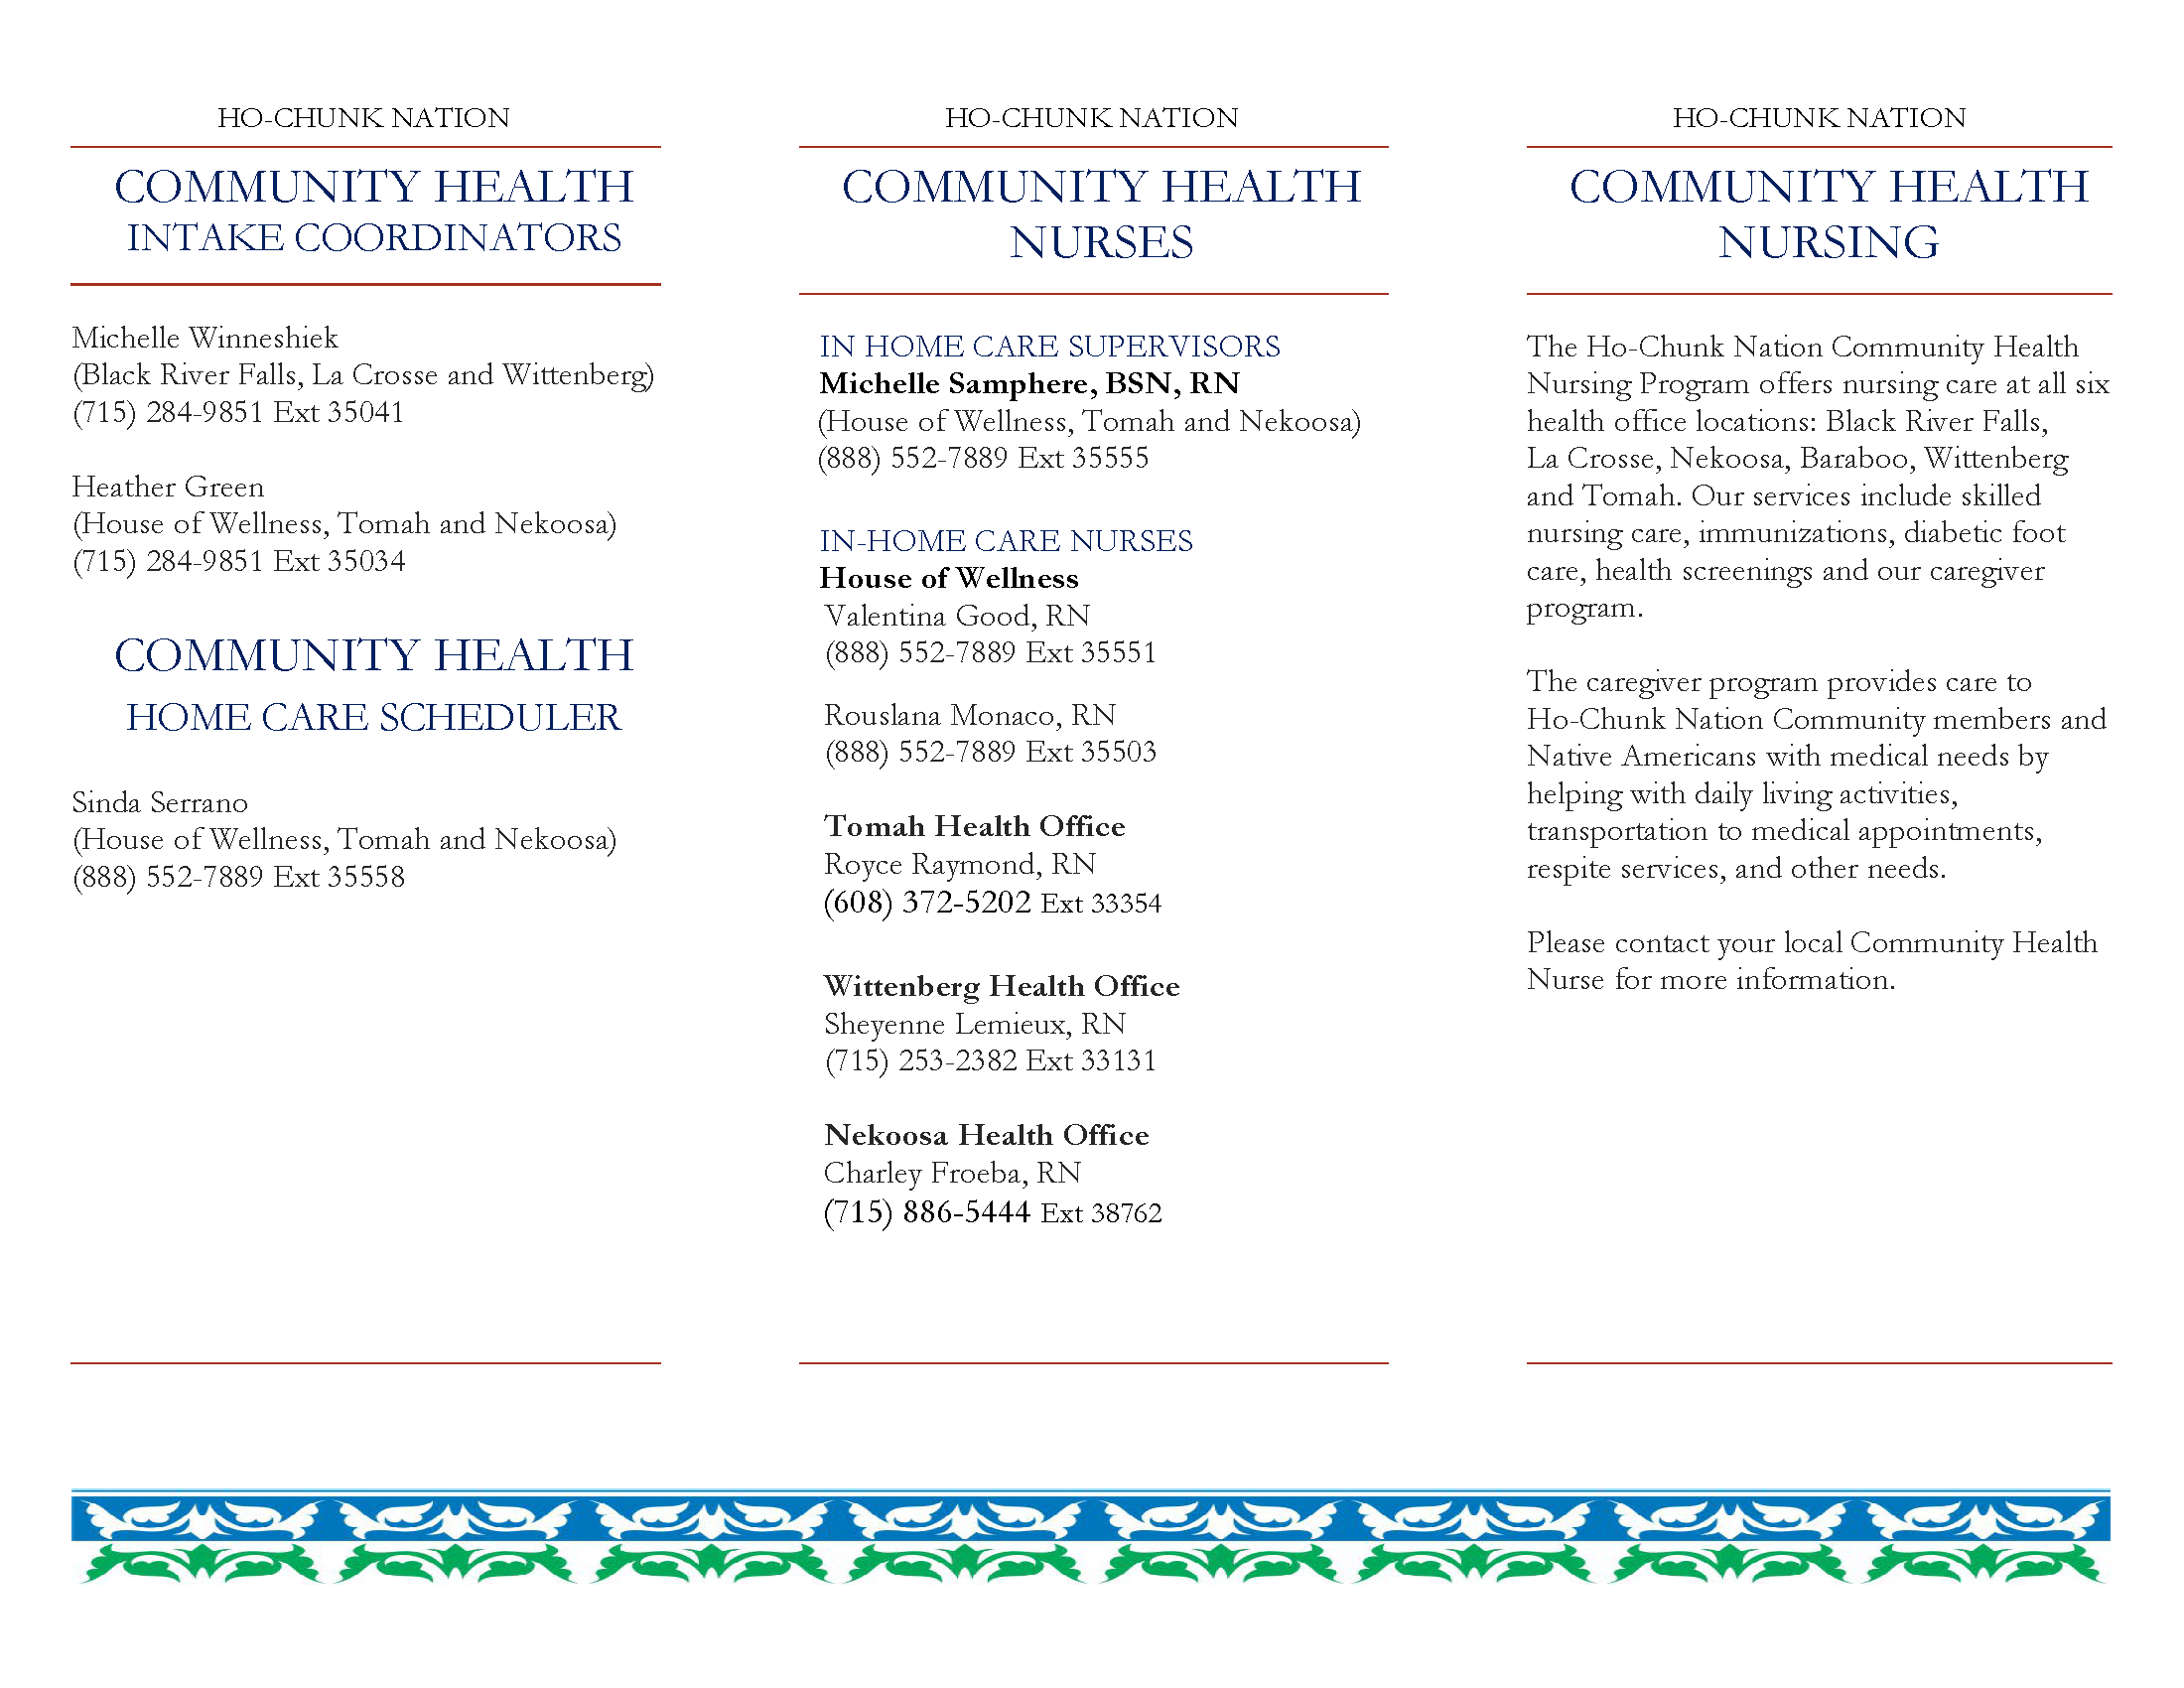 Community Health Brochure Information